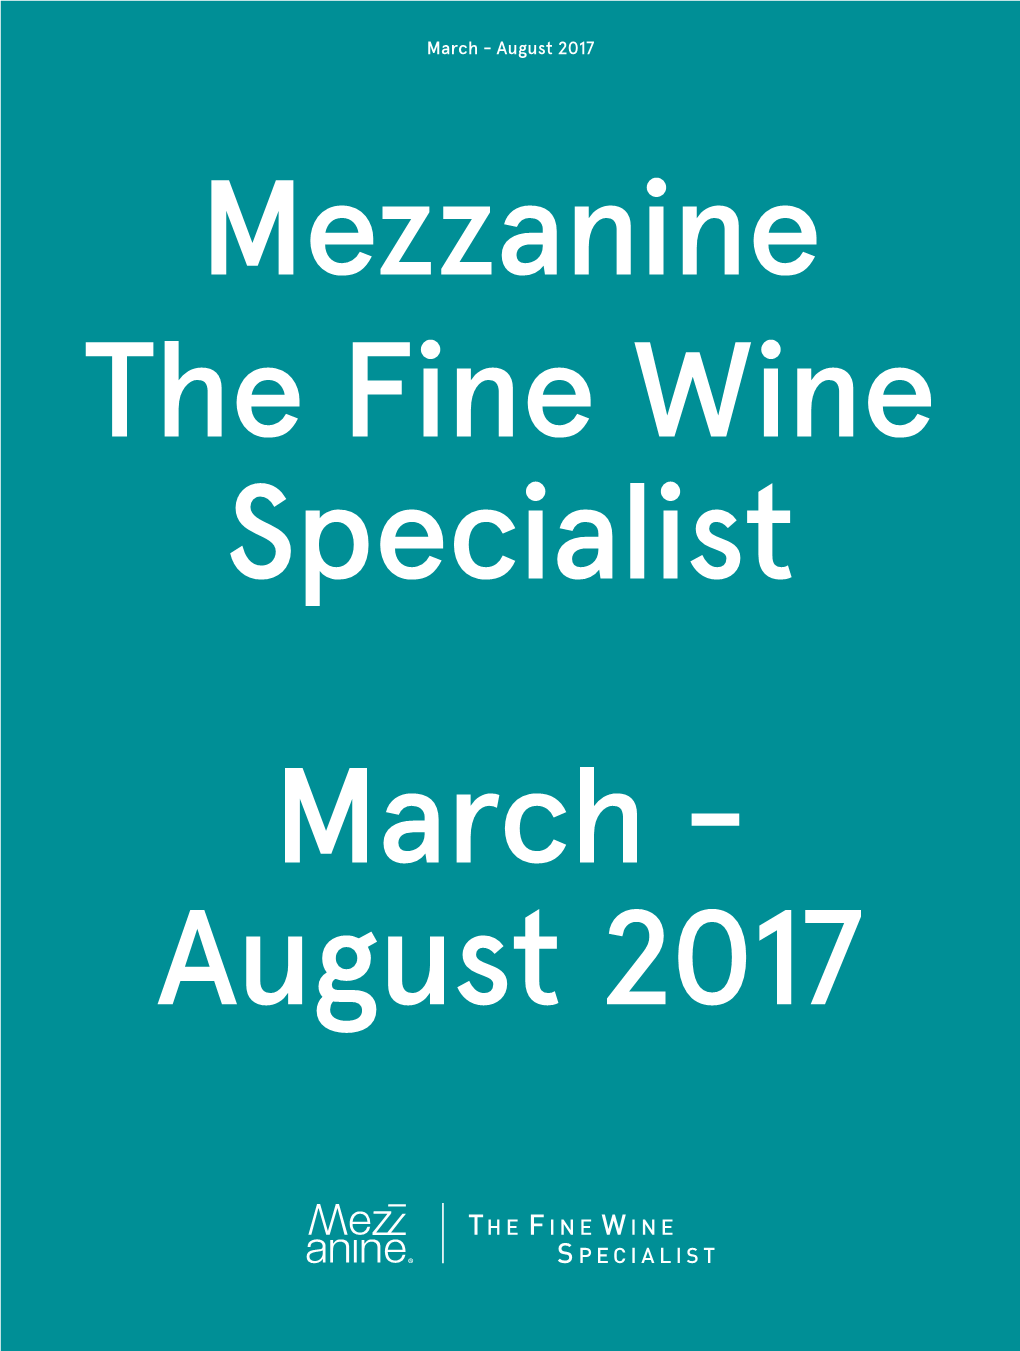 March - August 2017 Mezzanine the Fine Wine Specialist